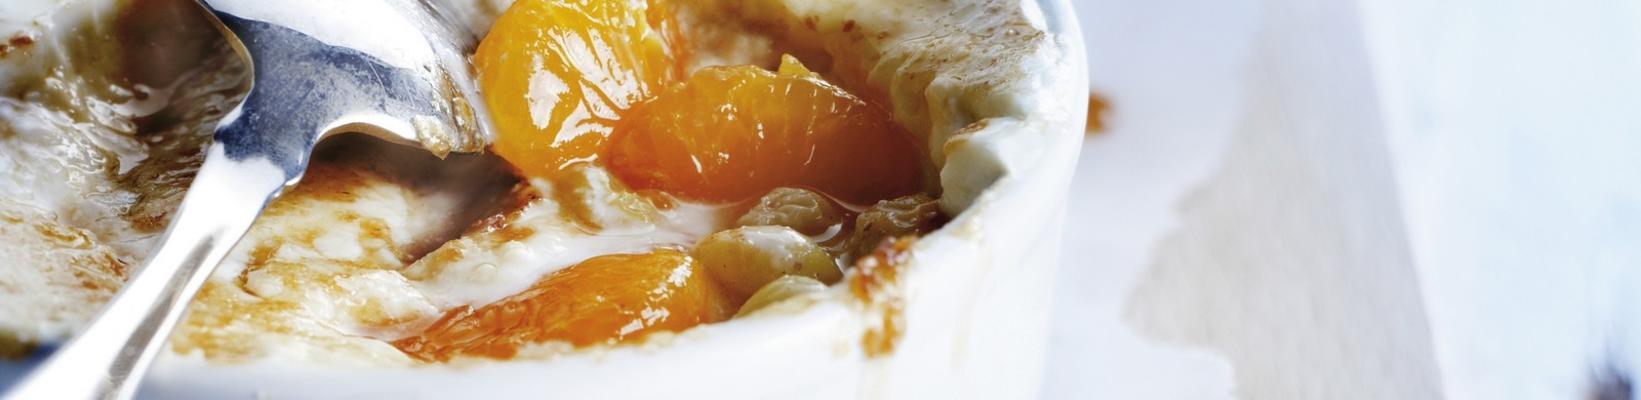 cottage cheese crème brûlée with mandarin and raisins